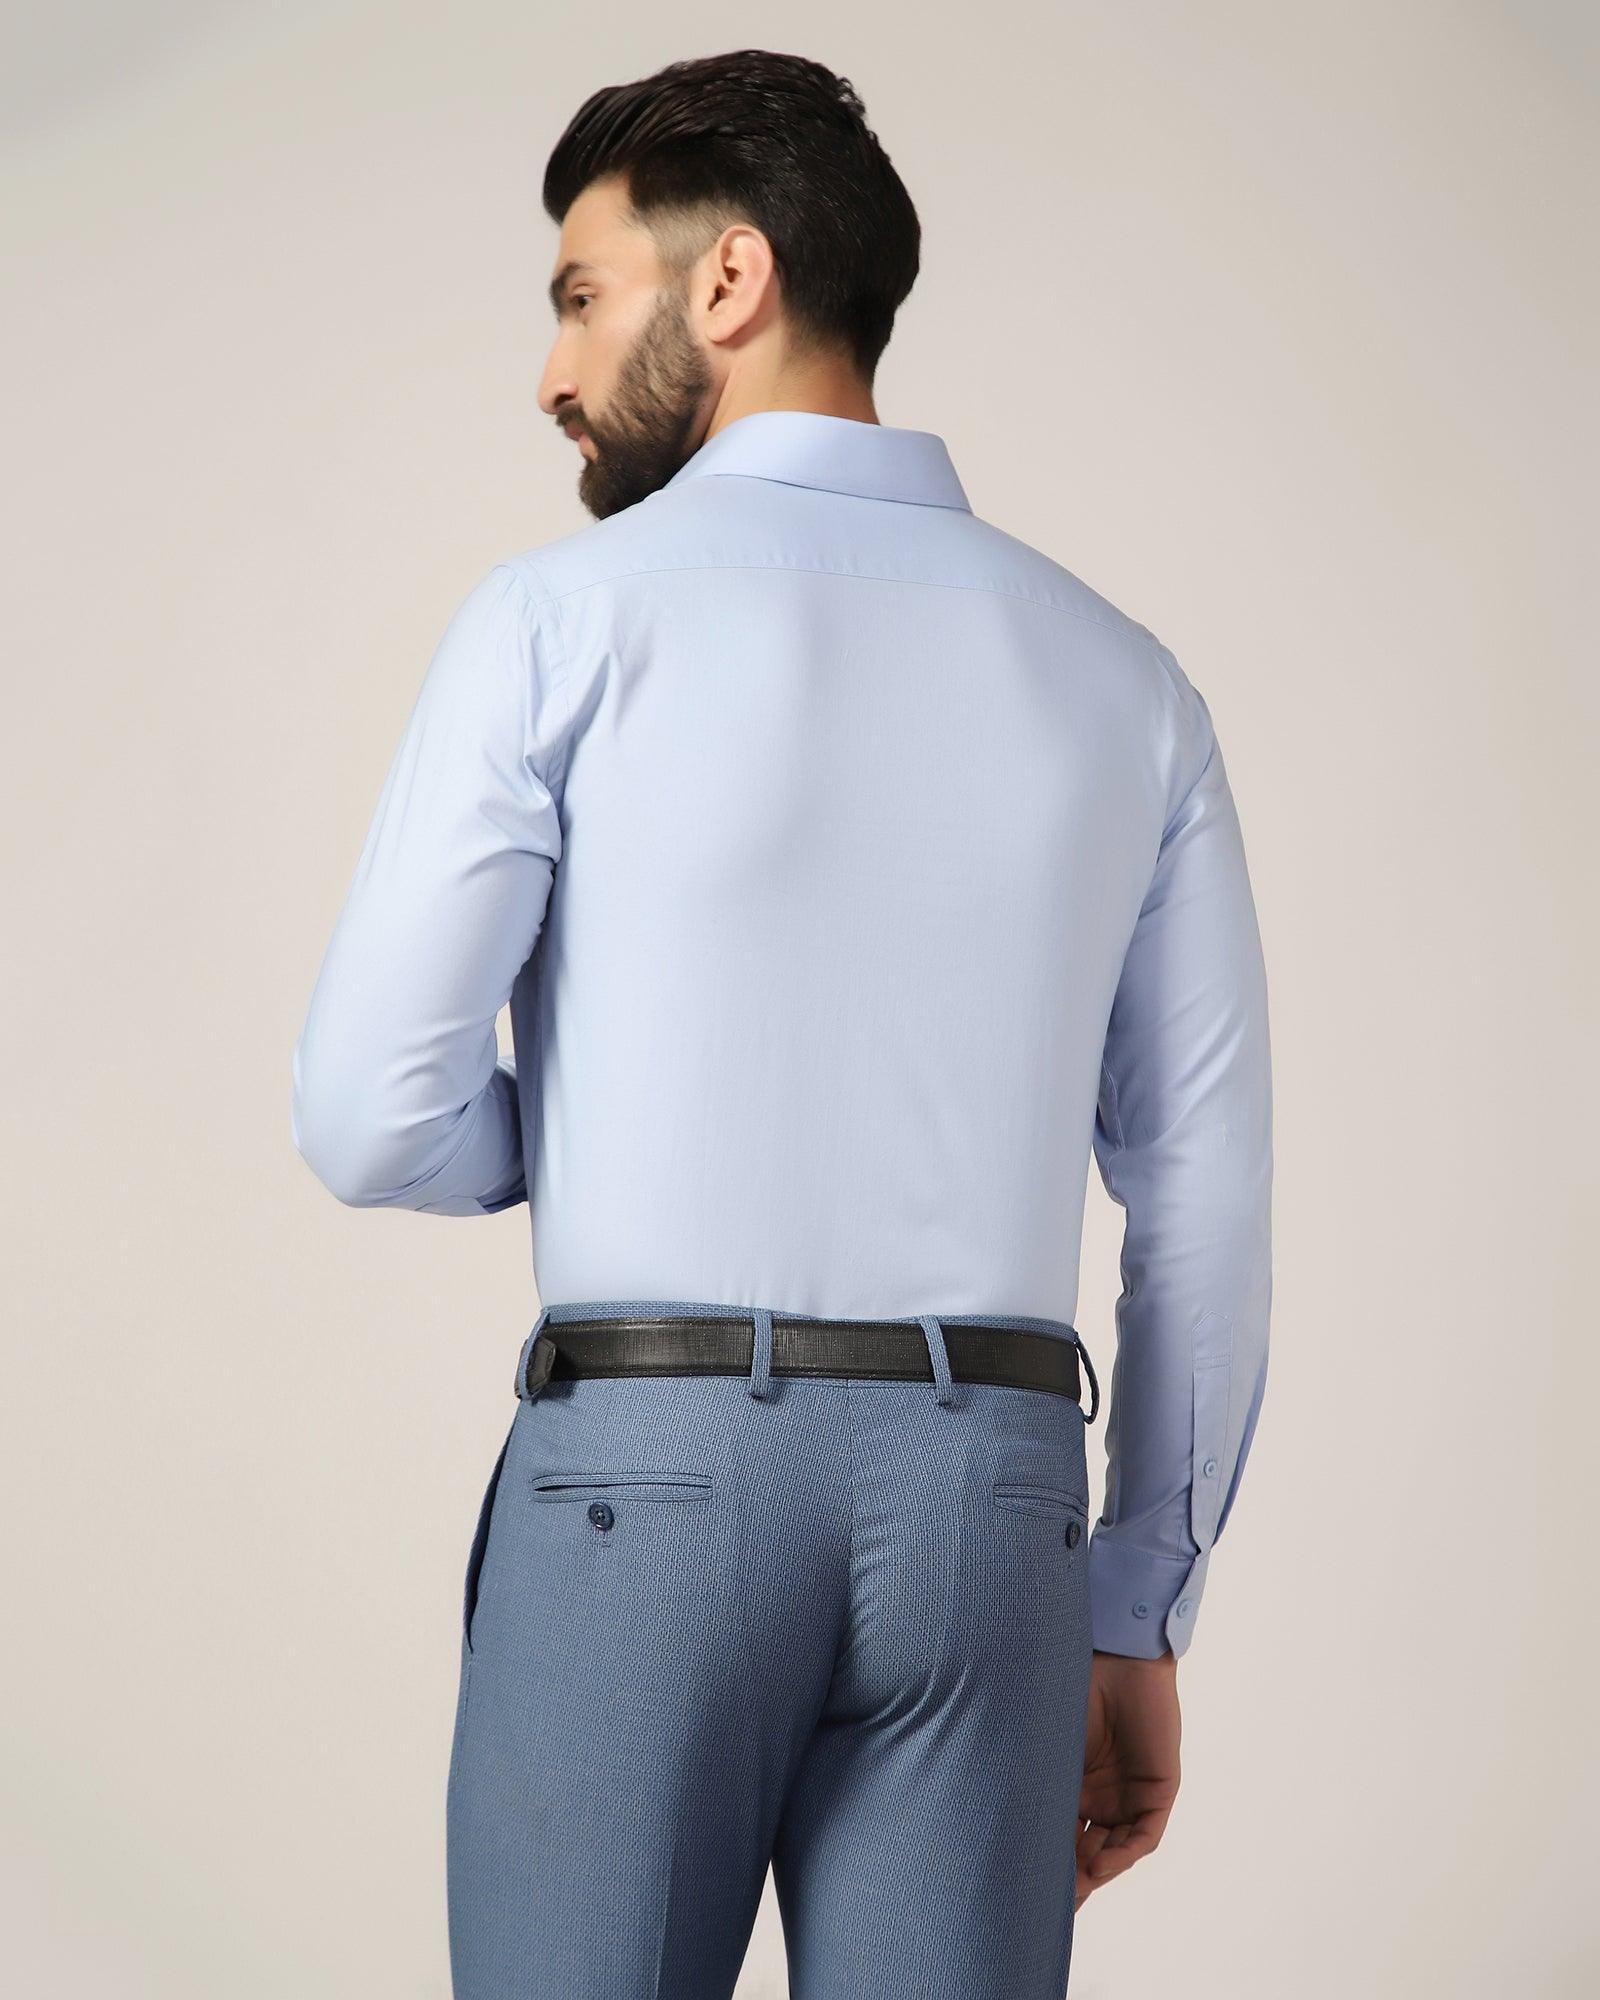 Formal Blue Solid Shirt - Retro